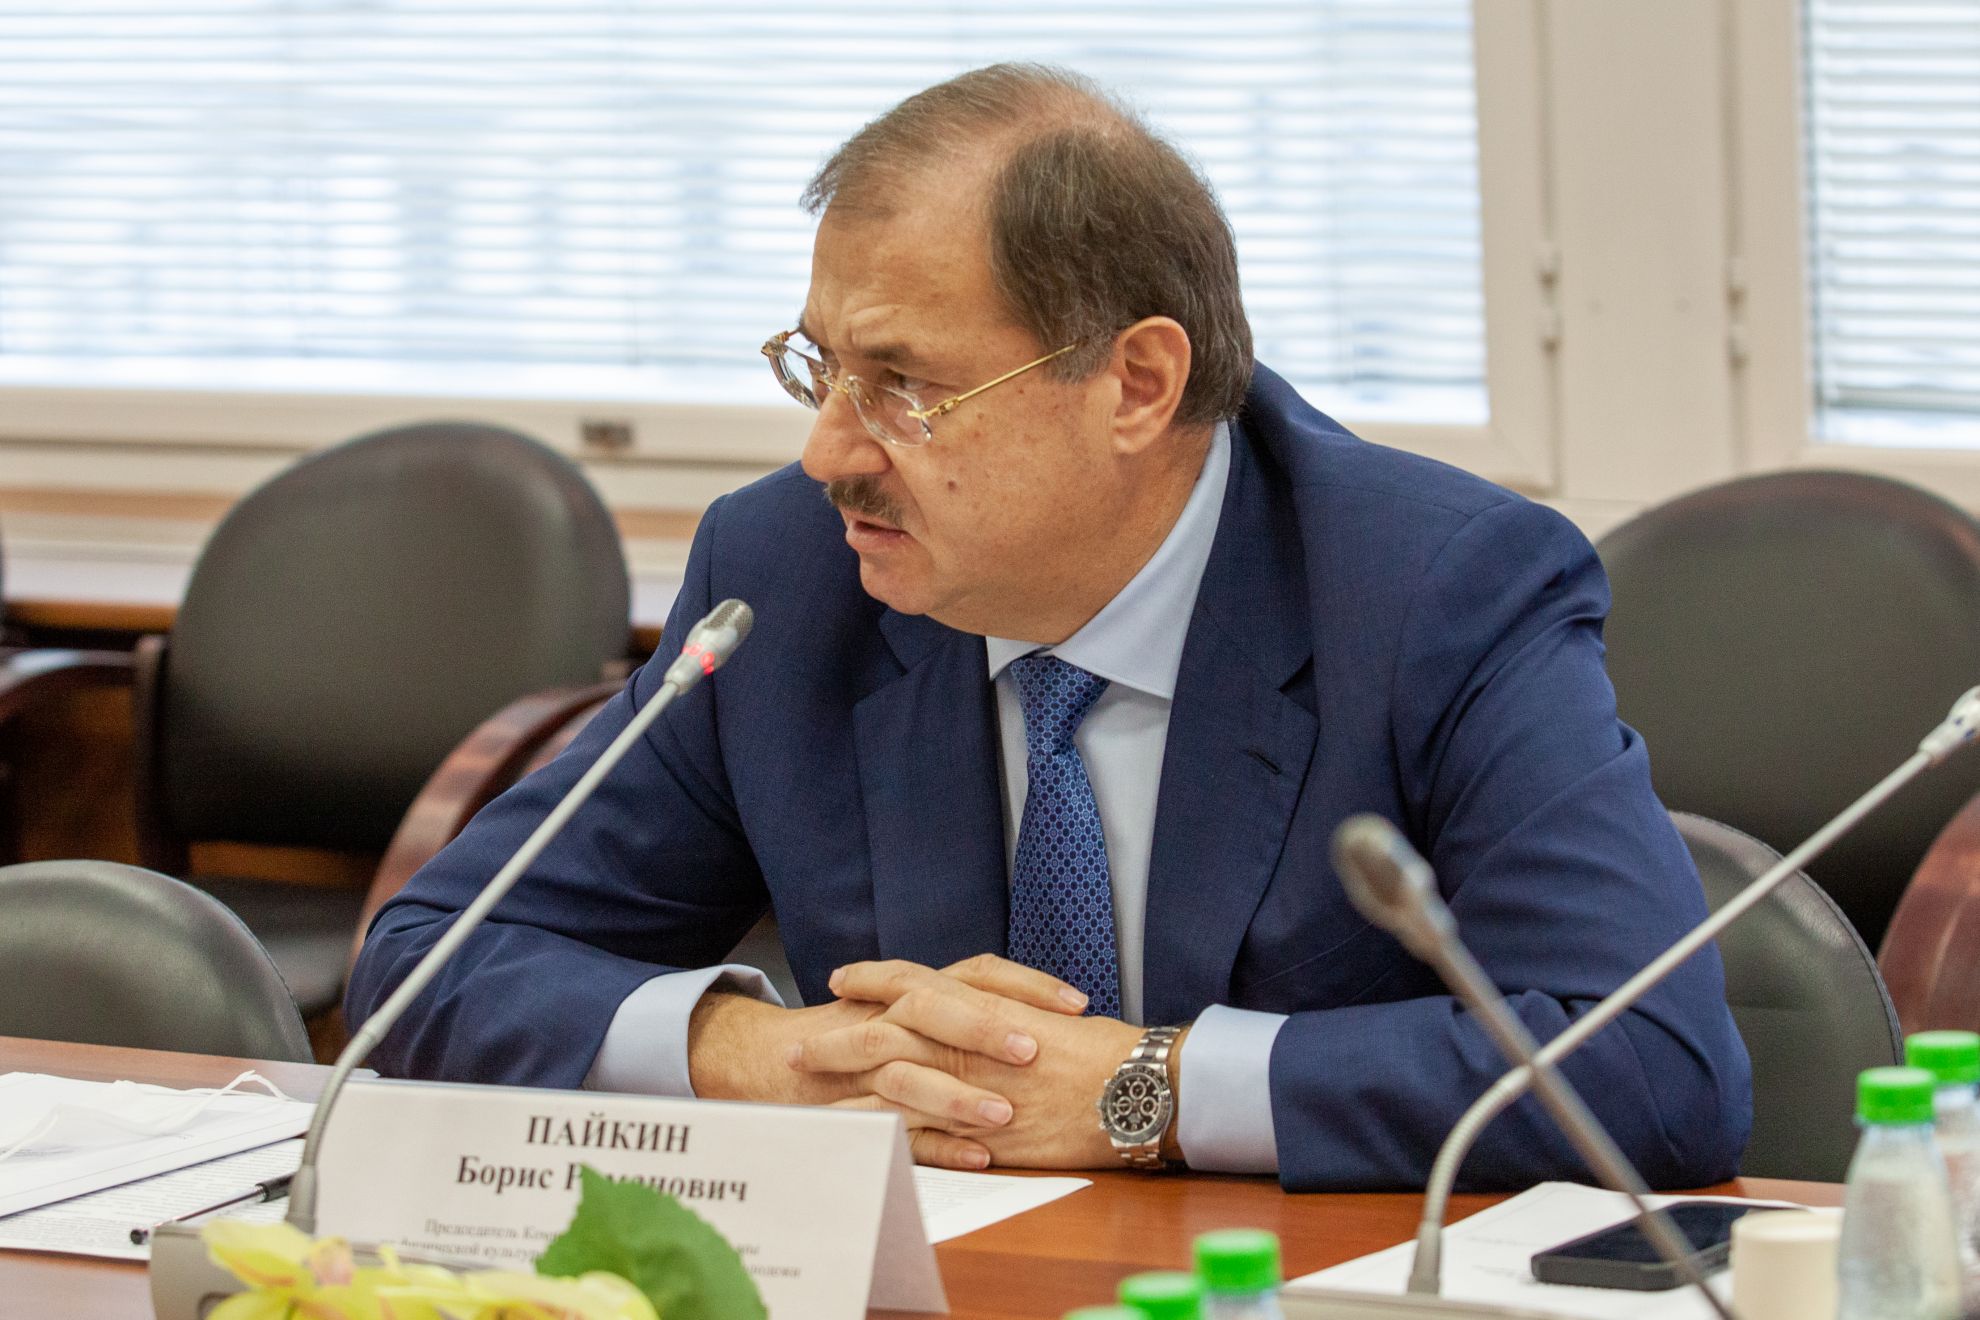 В Комитете обсудили законопроект «О молодежной политике в Российской Федерации» 